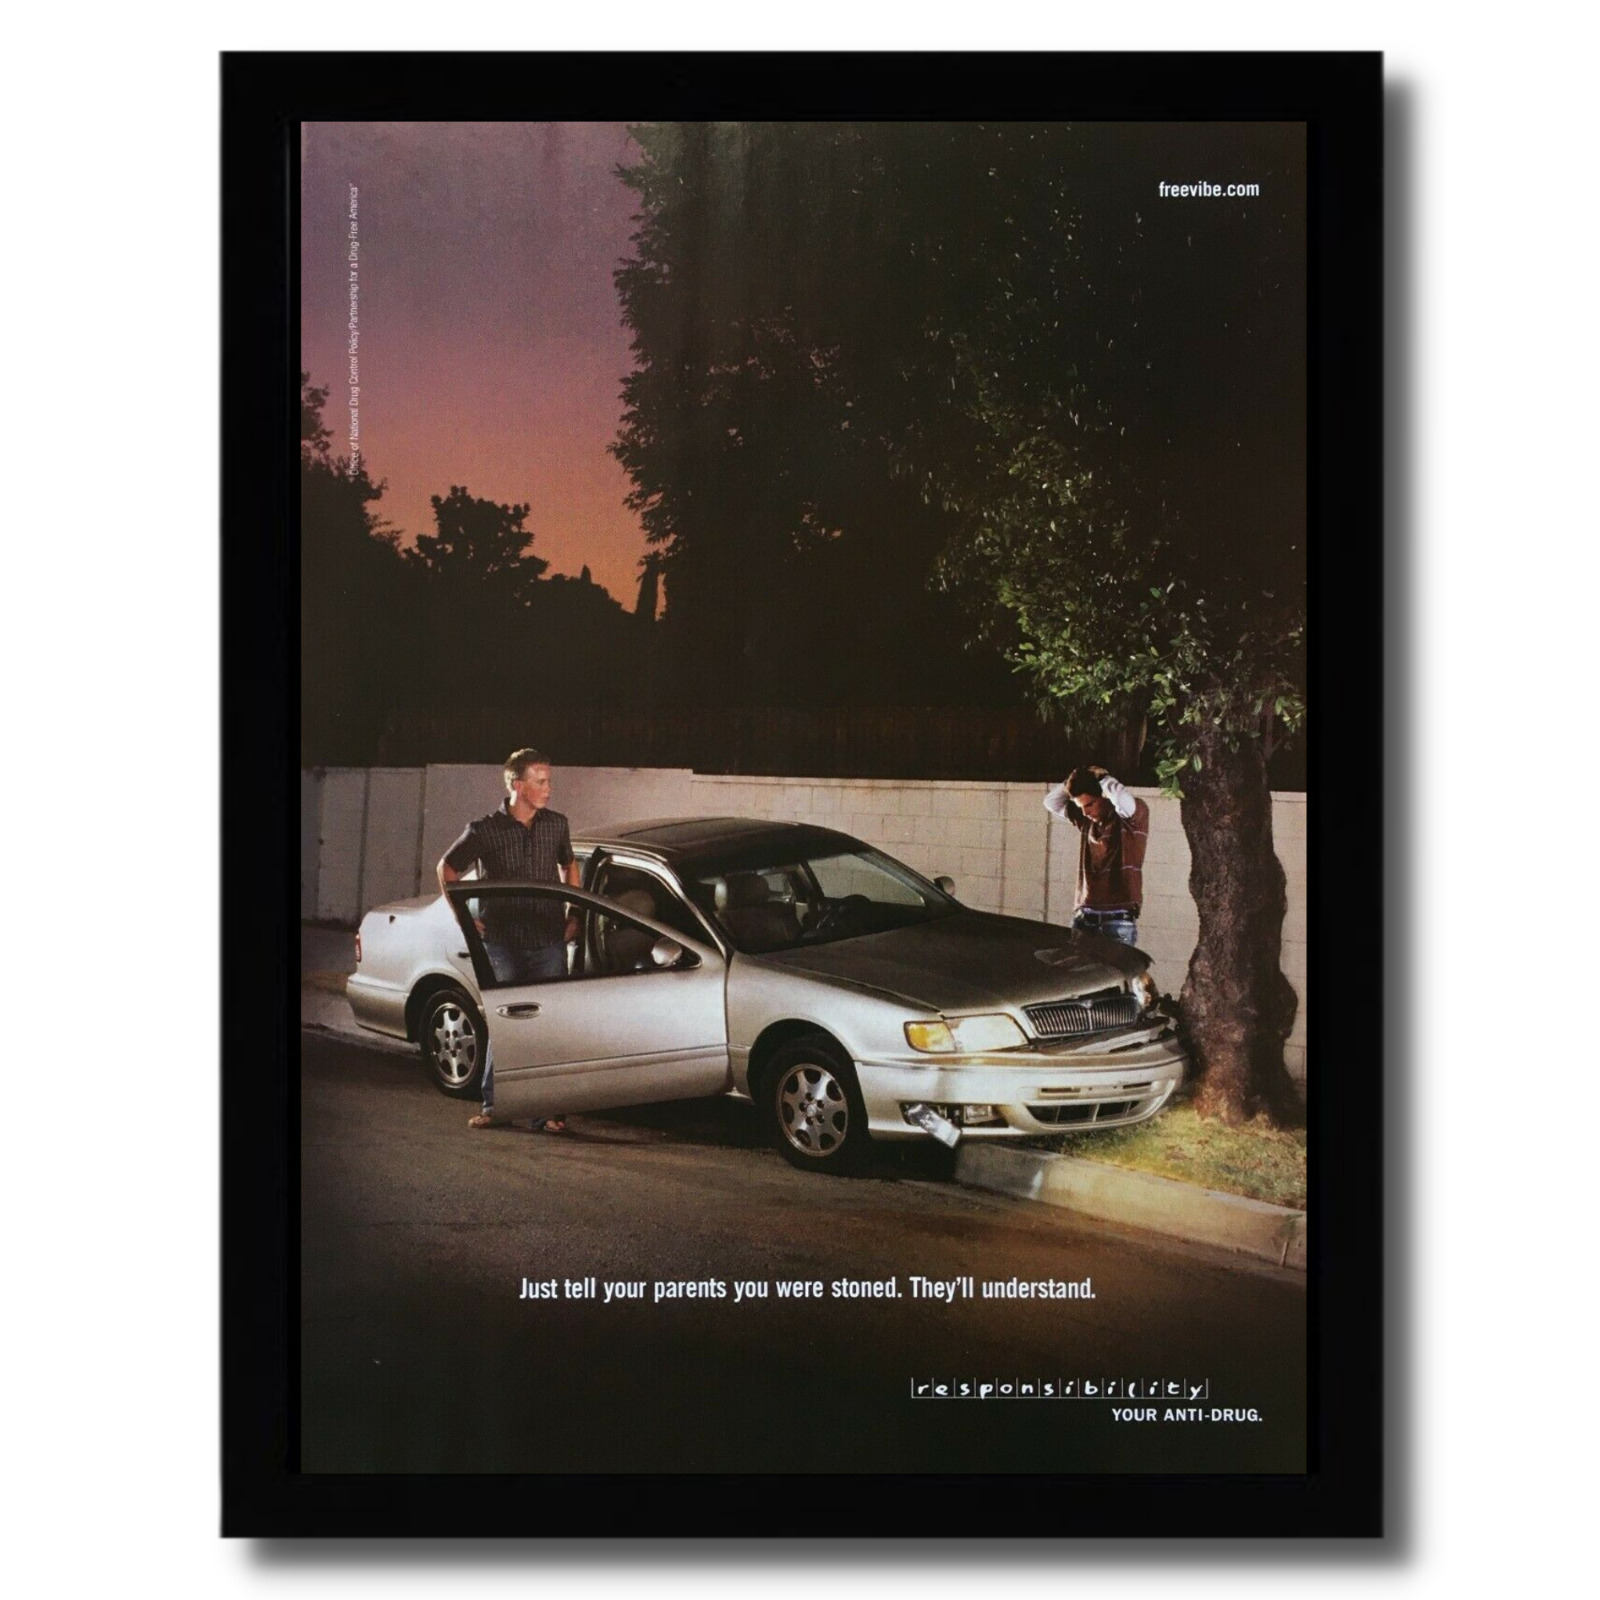 2003 Anti-drug Anti-marijuana Framed Print Ad/Poster Advertisement Car Accident